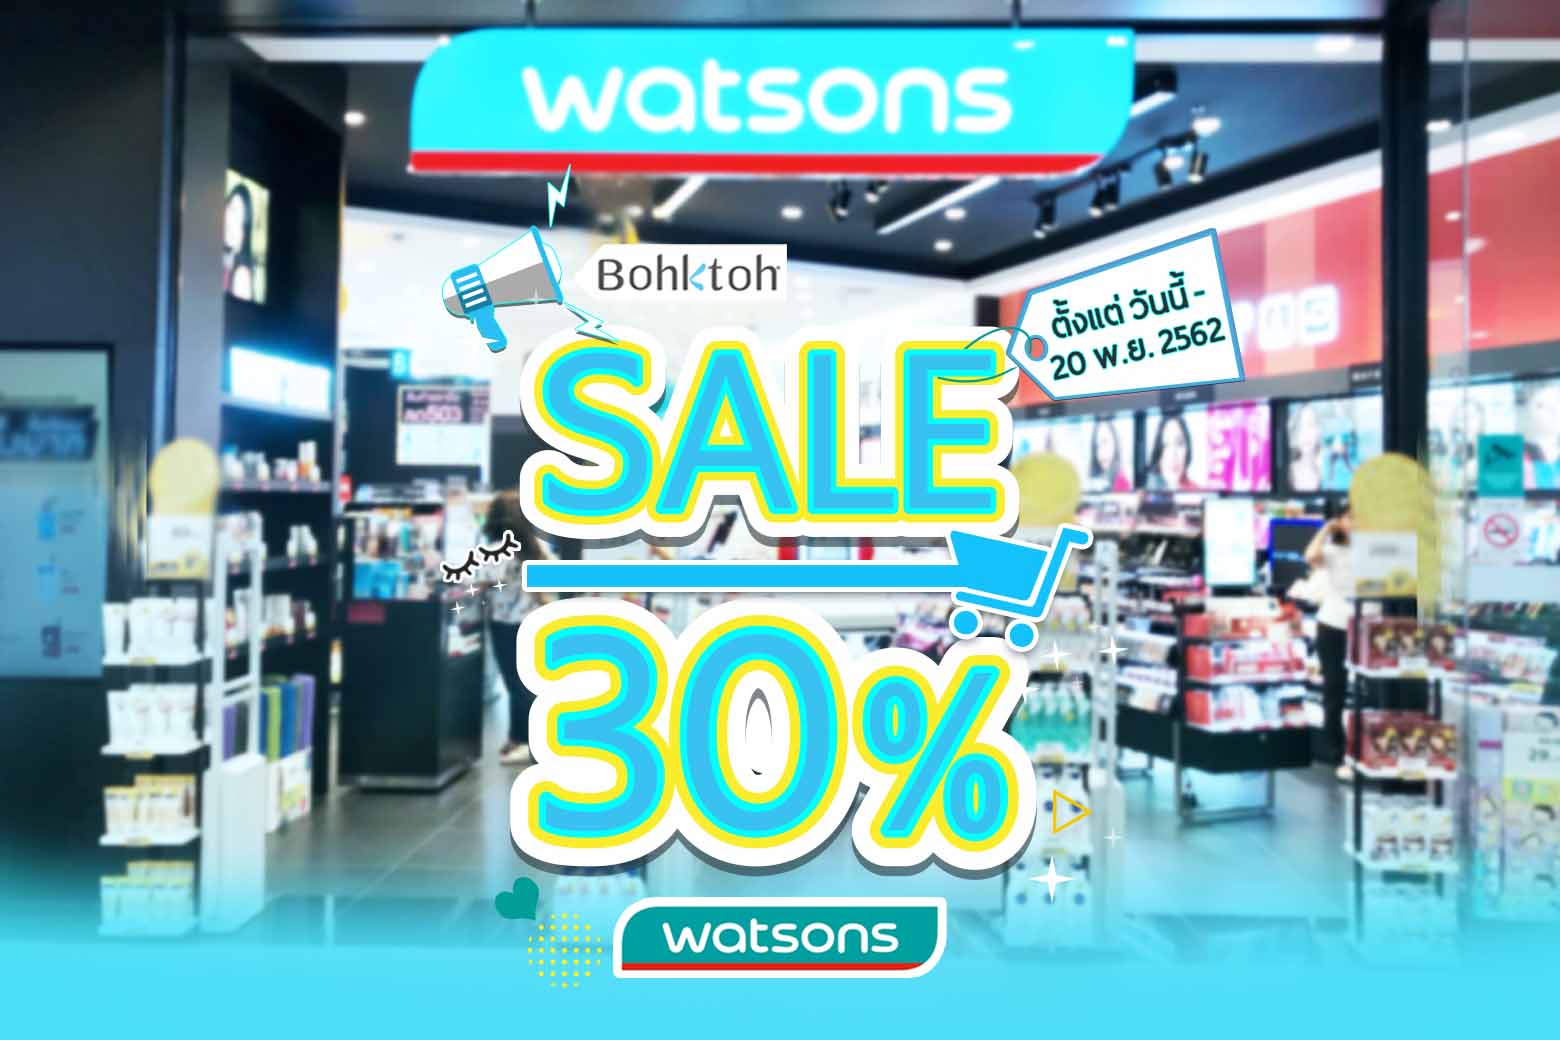 Watsons Sale 30% Bohktoh ขนตาปลอม บอกต่อ สั่งซื้อออนไลน์คลิกเลย 